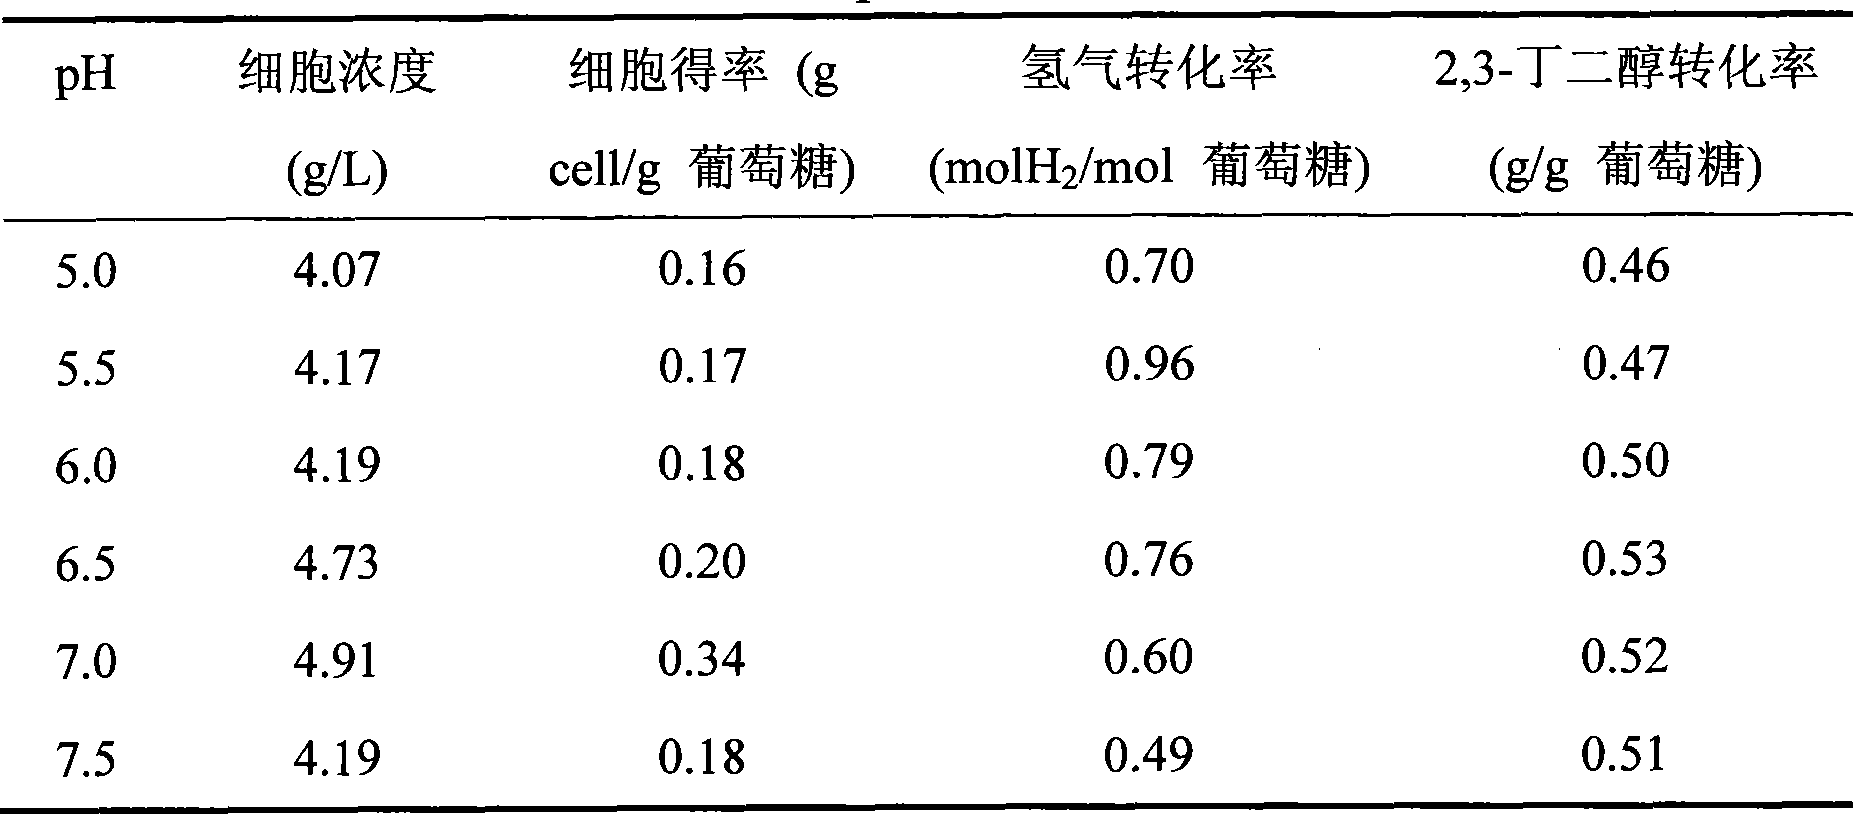 Klebsiella pneumoniae and method of preparing hydrogen and 2, 3-butanediol thereby